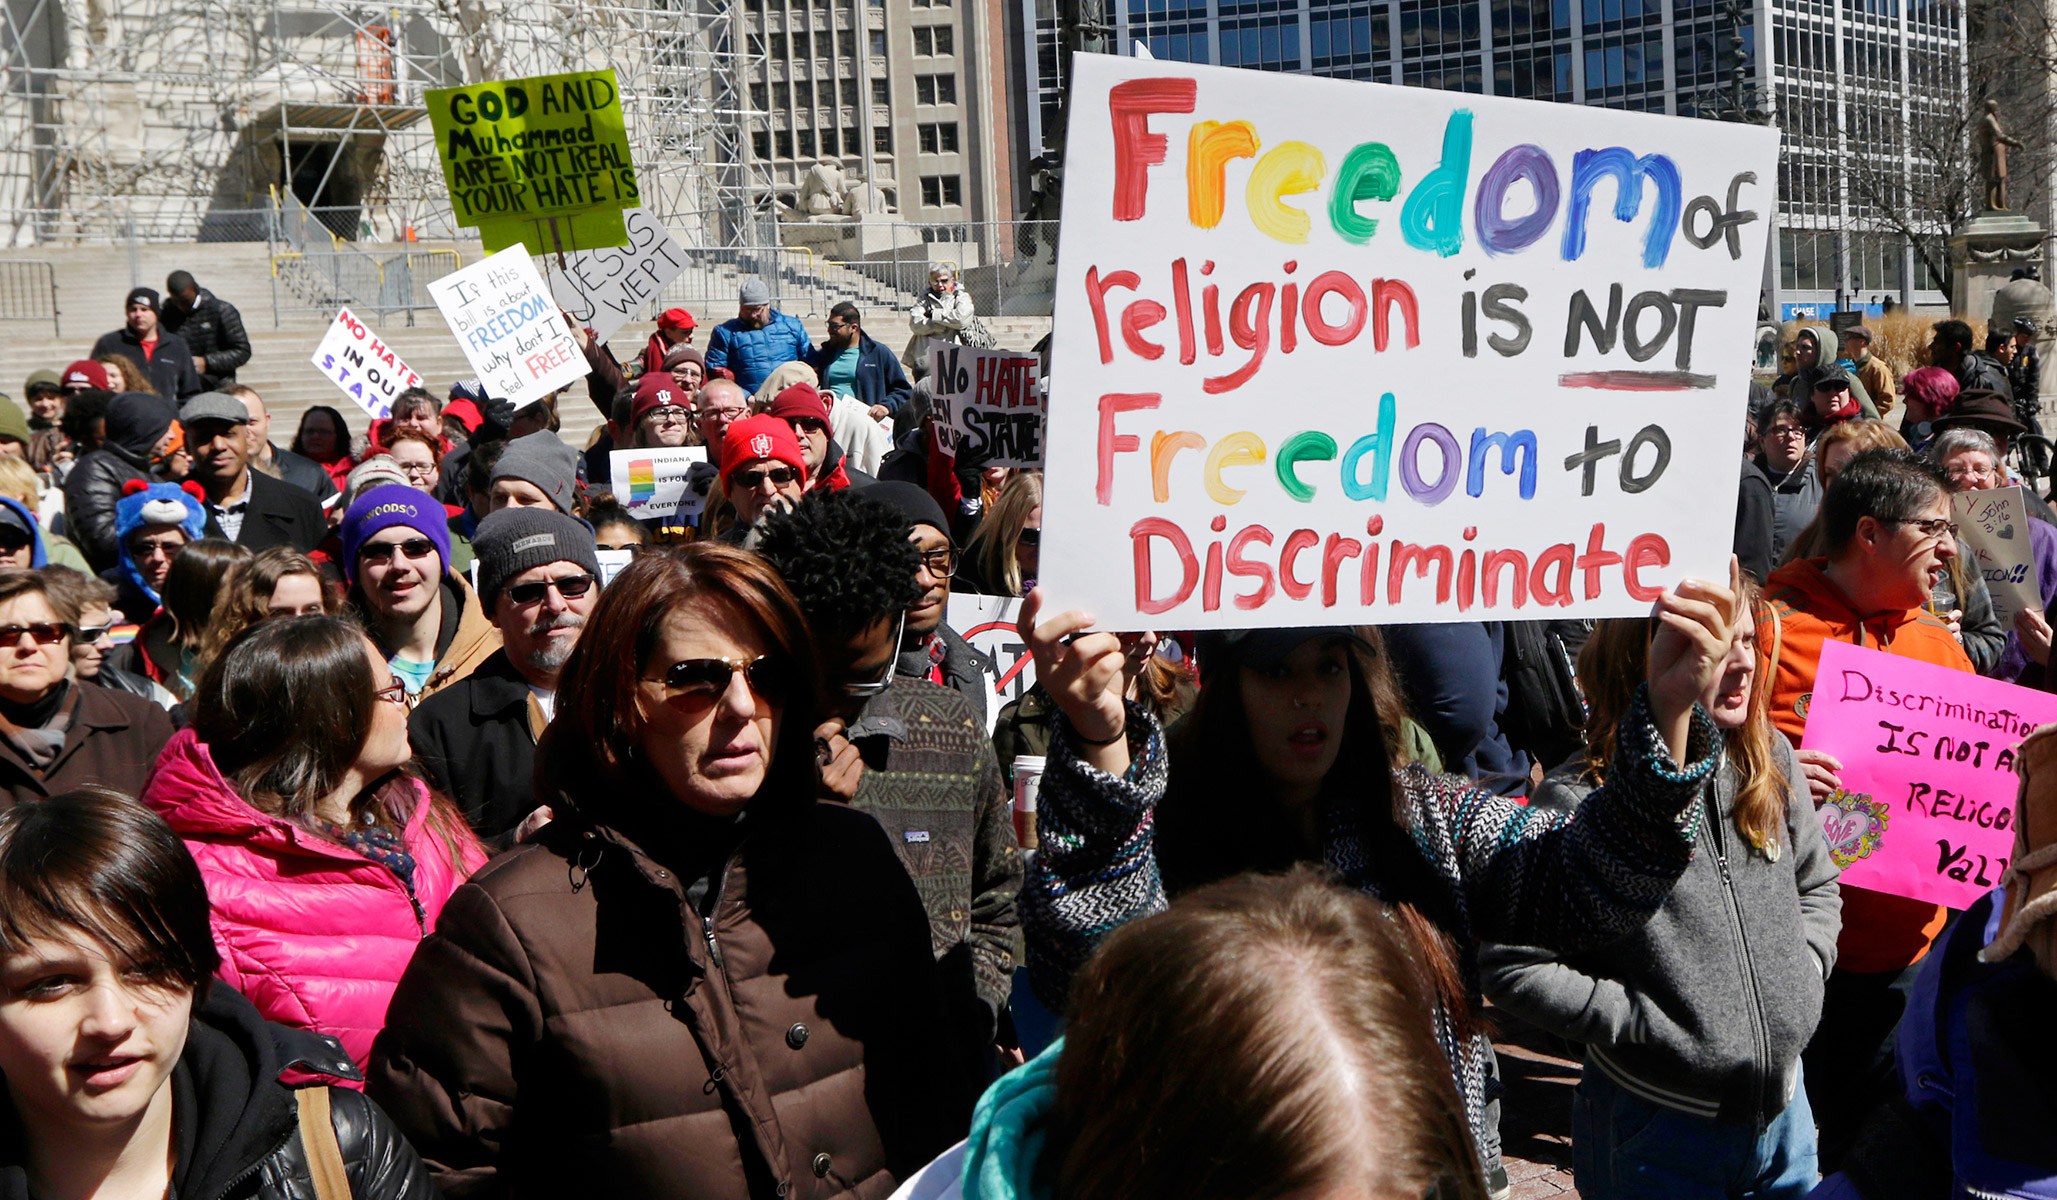 religious freedom-not discriminate